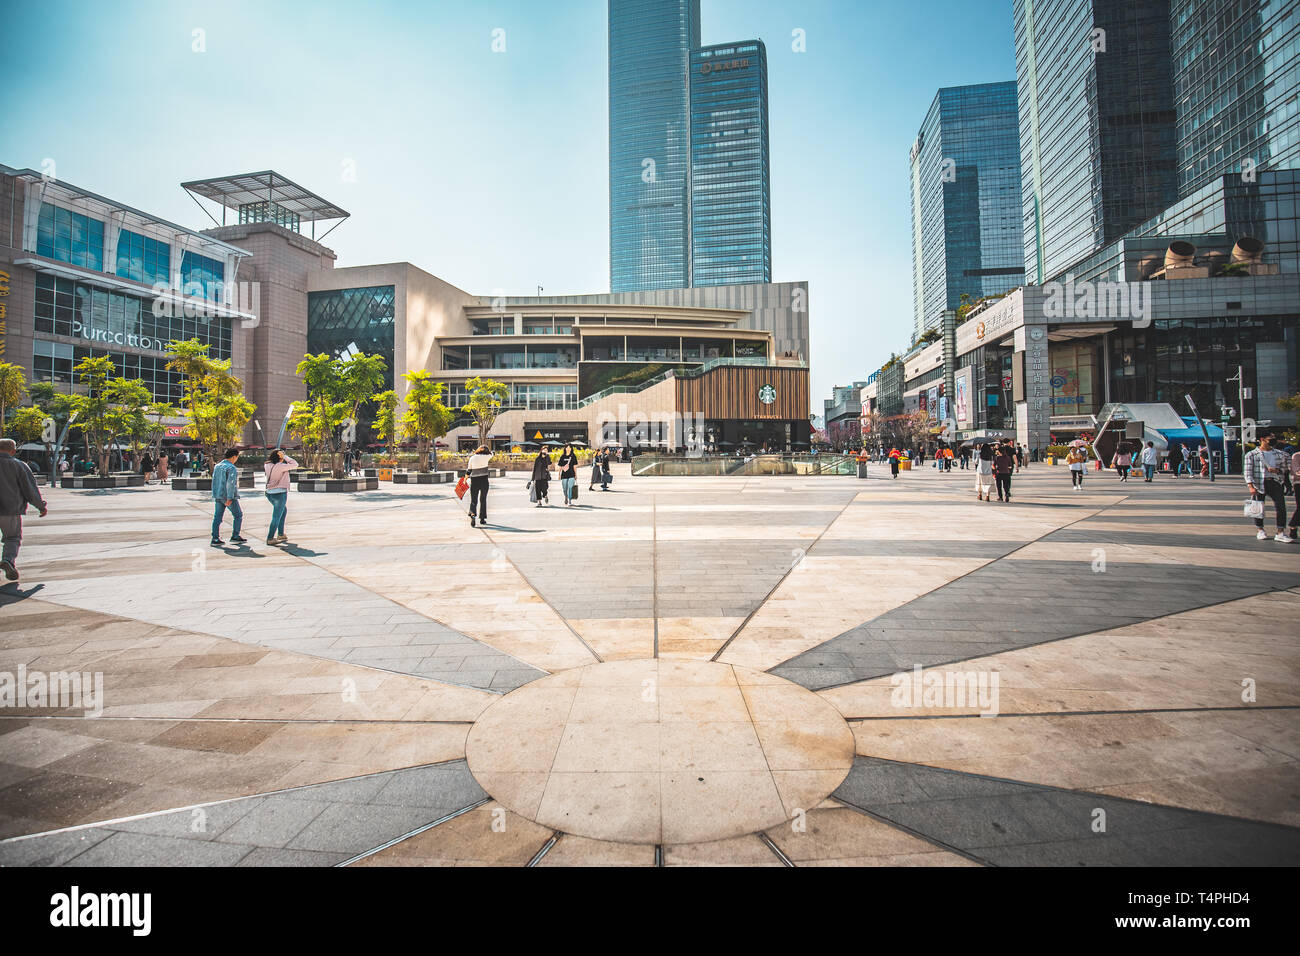 Shenzhen - Jan 31, 2019 : Viisit Shenzhen Bay Pedestrian Shopping Street in day time. A famous shopping center. Stock Photo